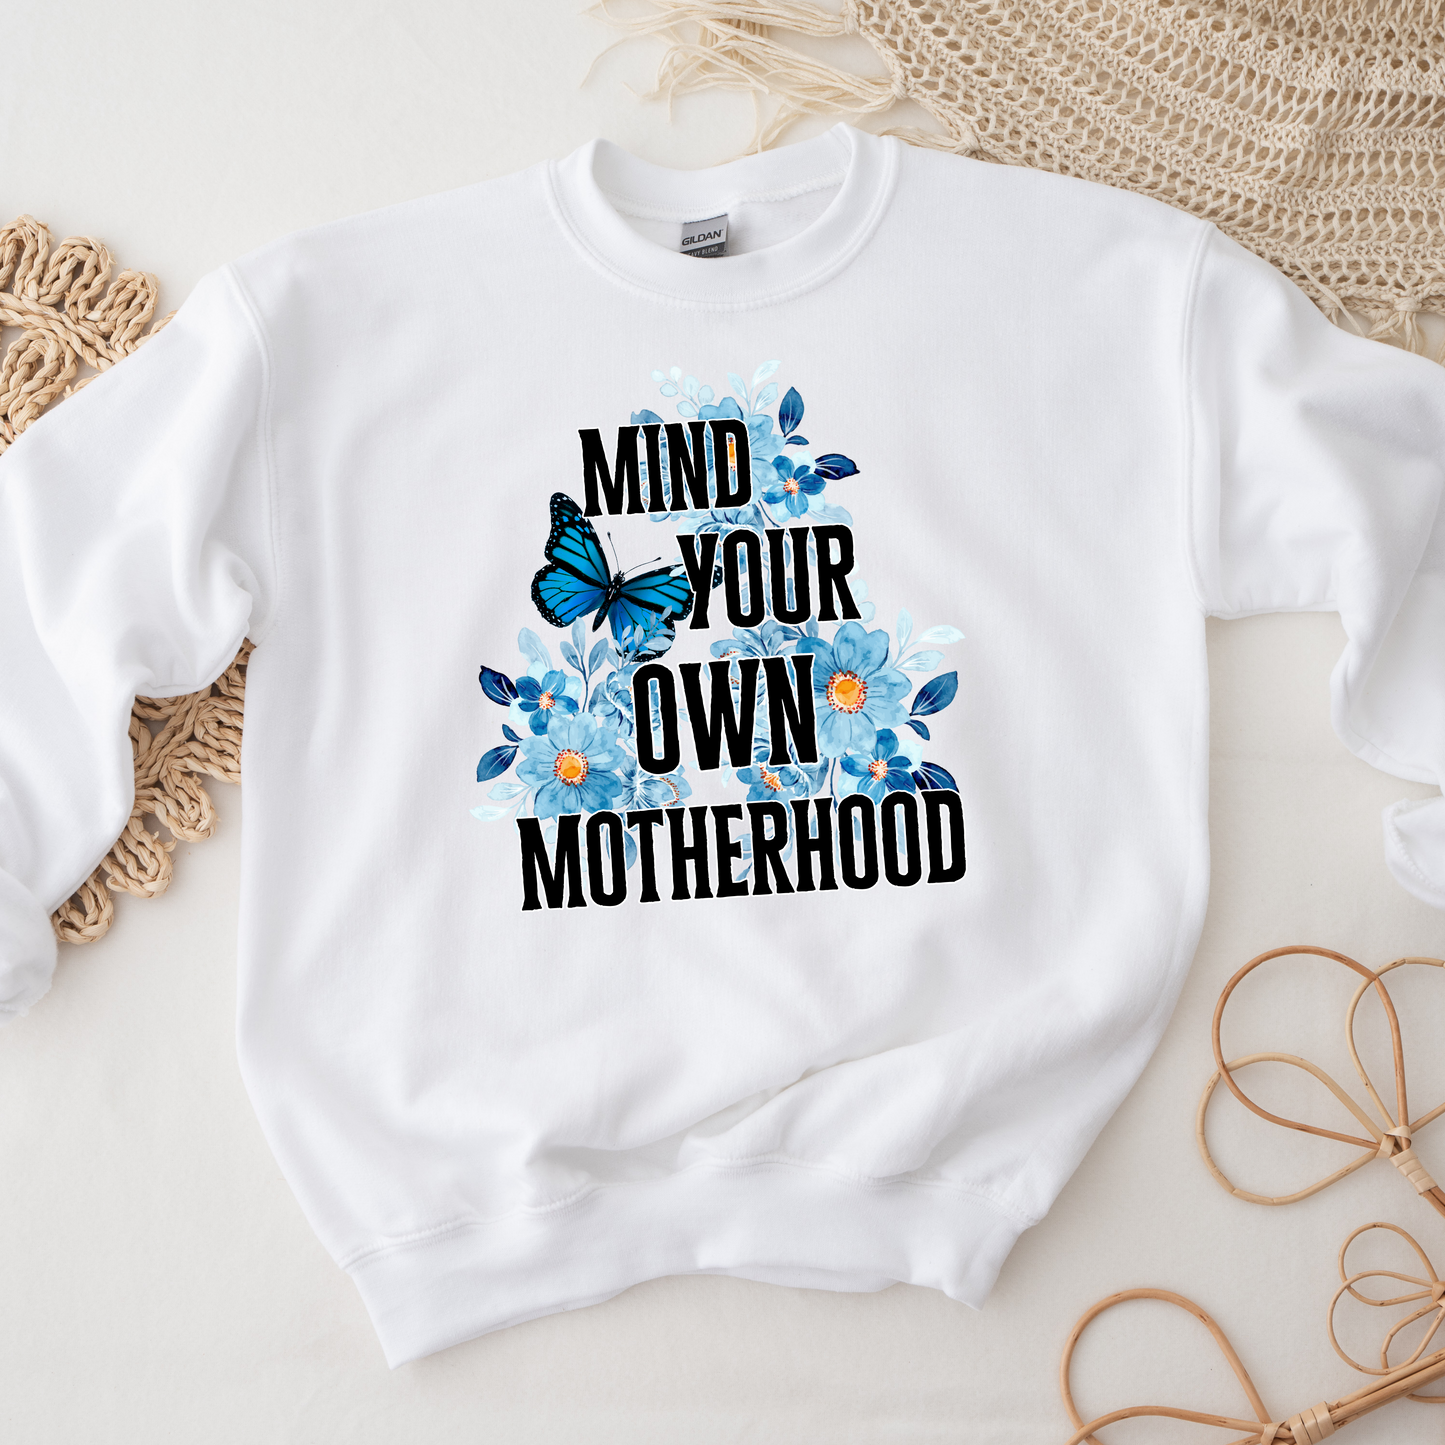 mind your own motherhood (BLUE FLORAL) shirt/sweatshirt